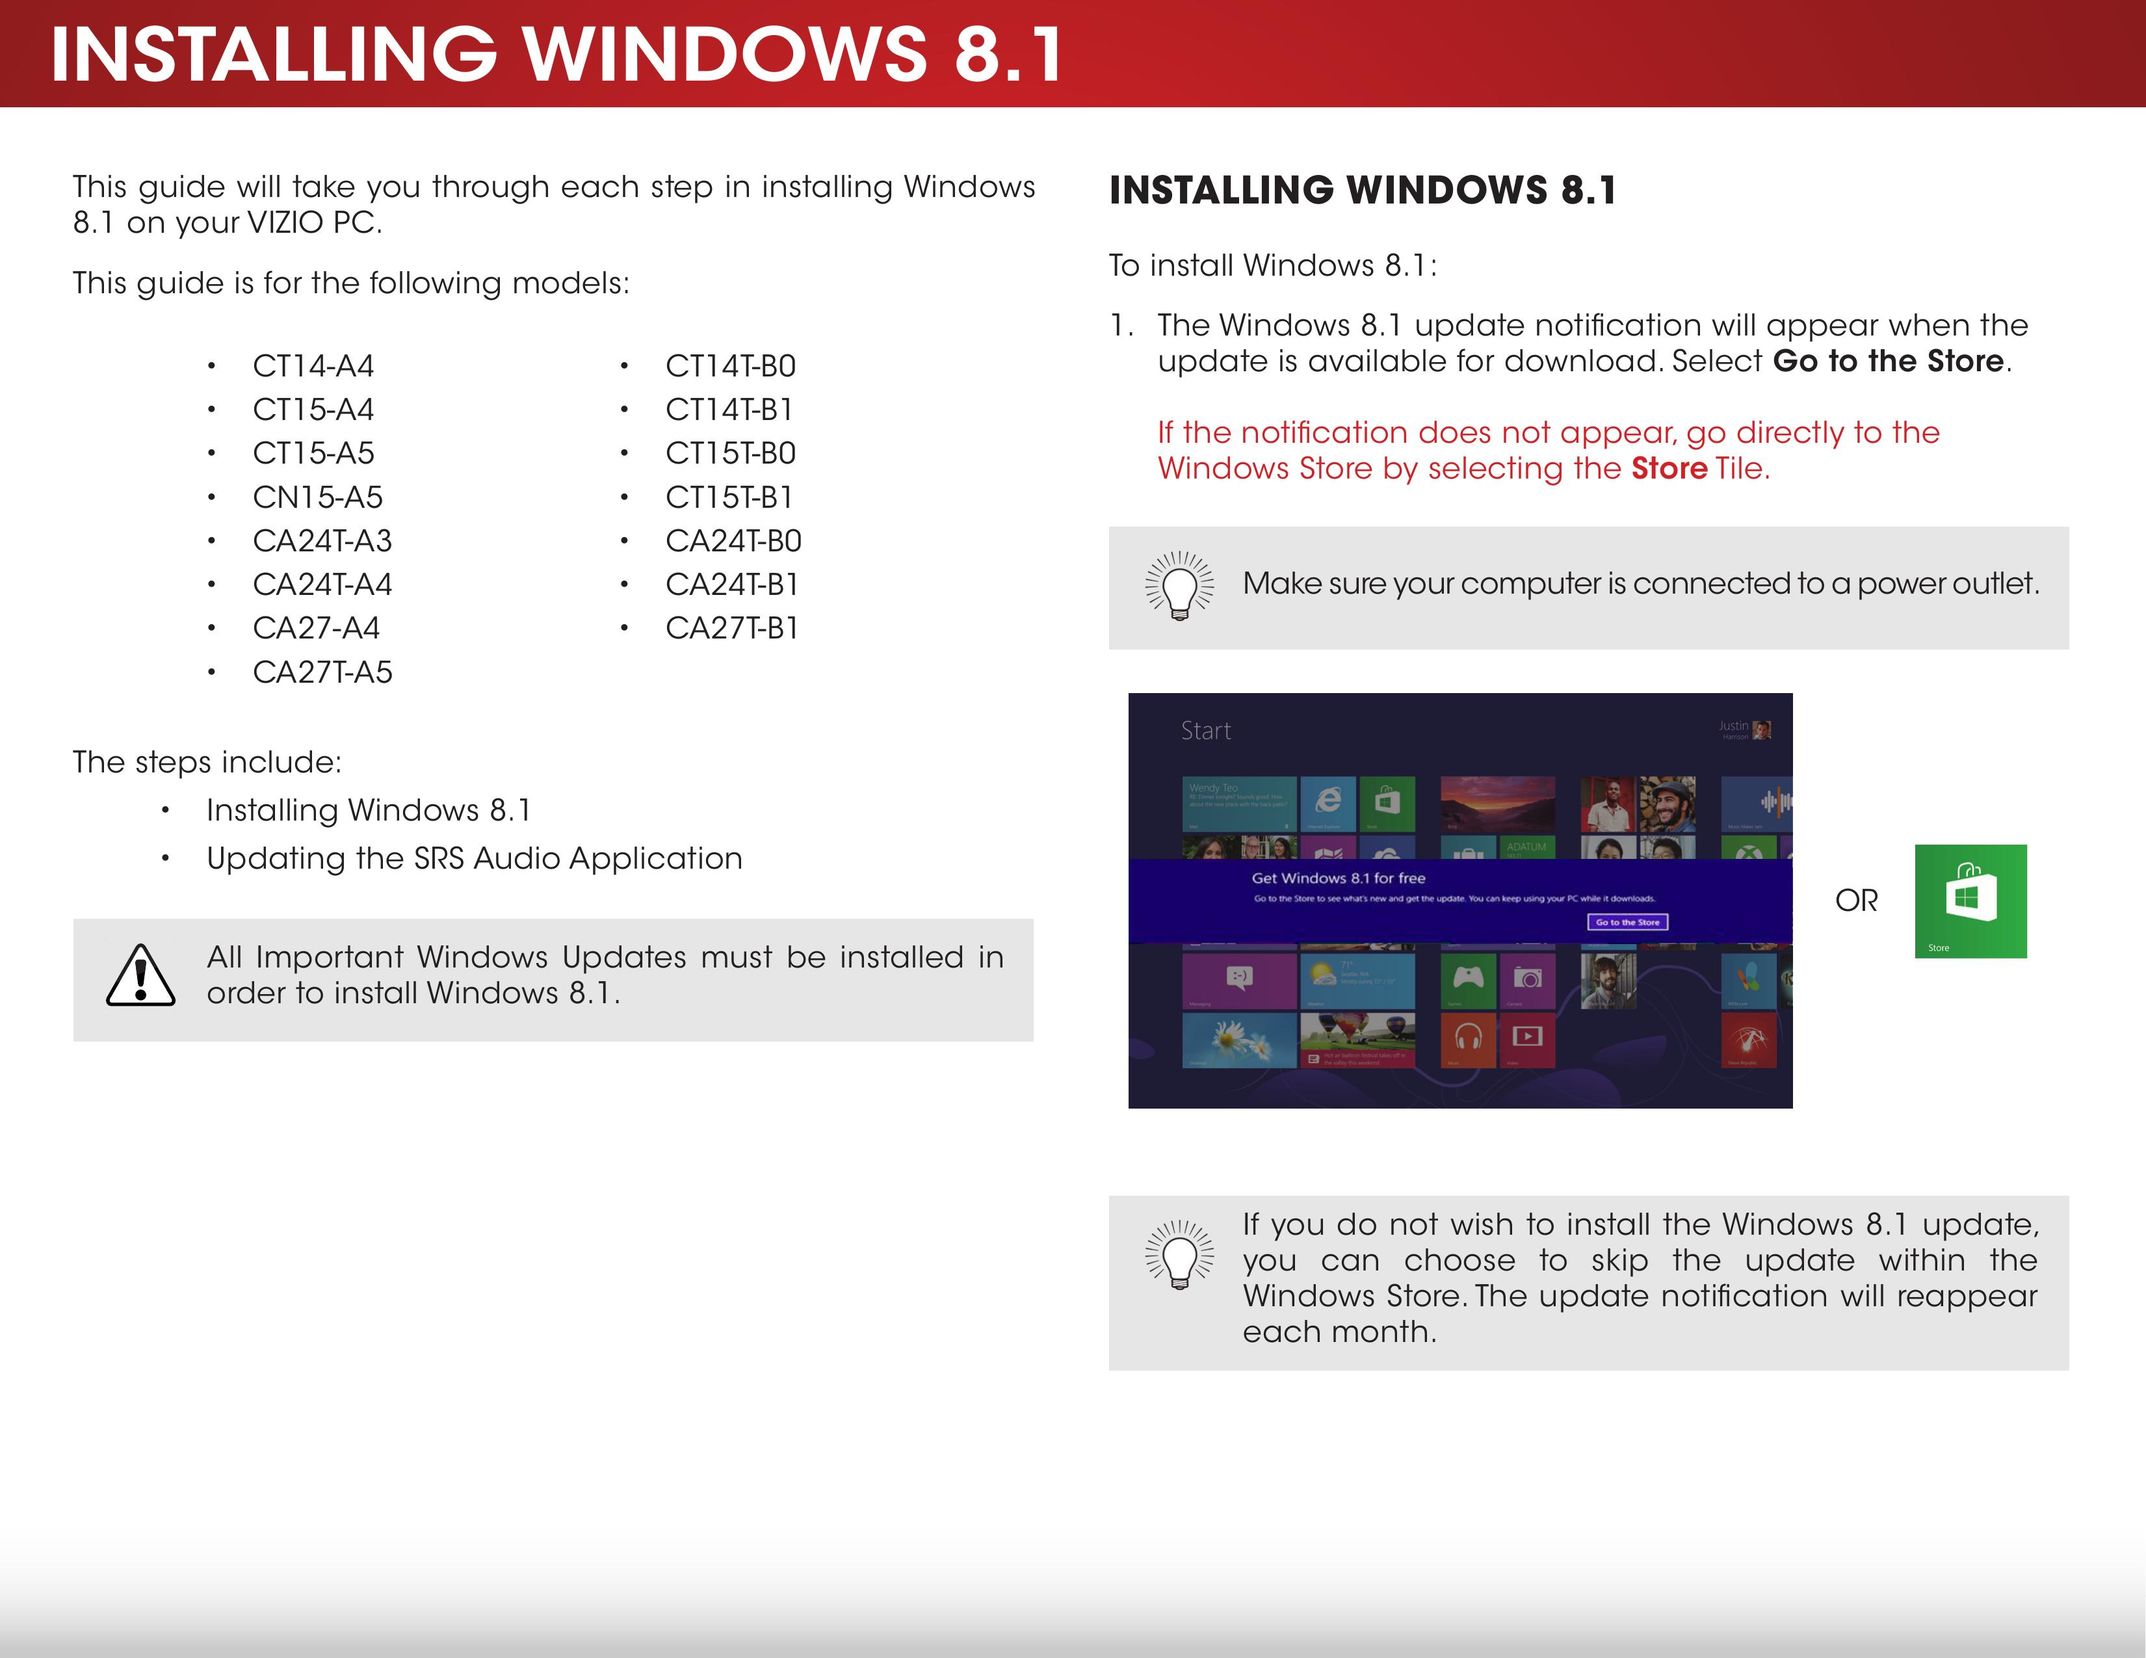 Microsoft CA27T-A5 Window User Manual